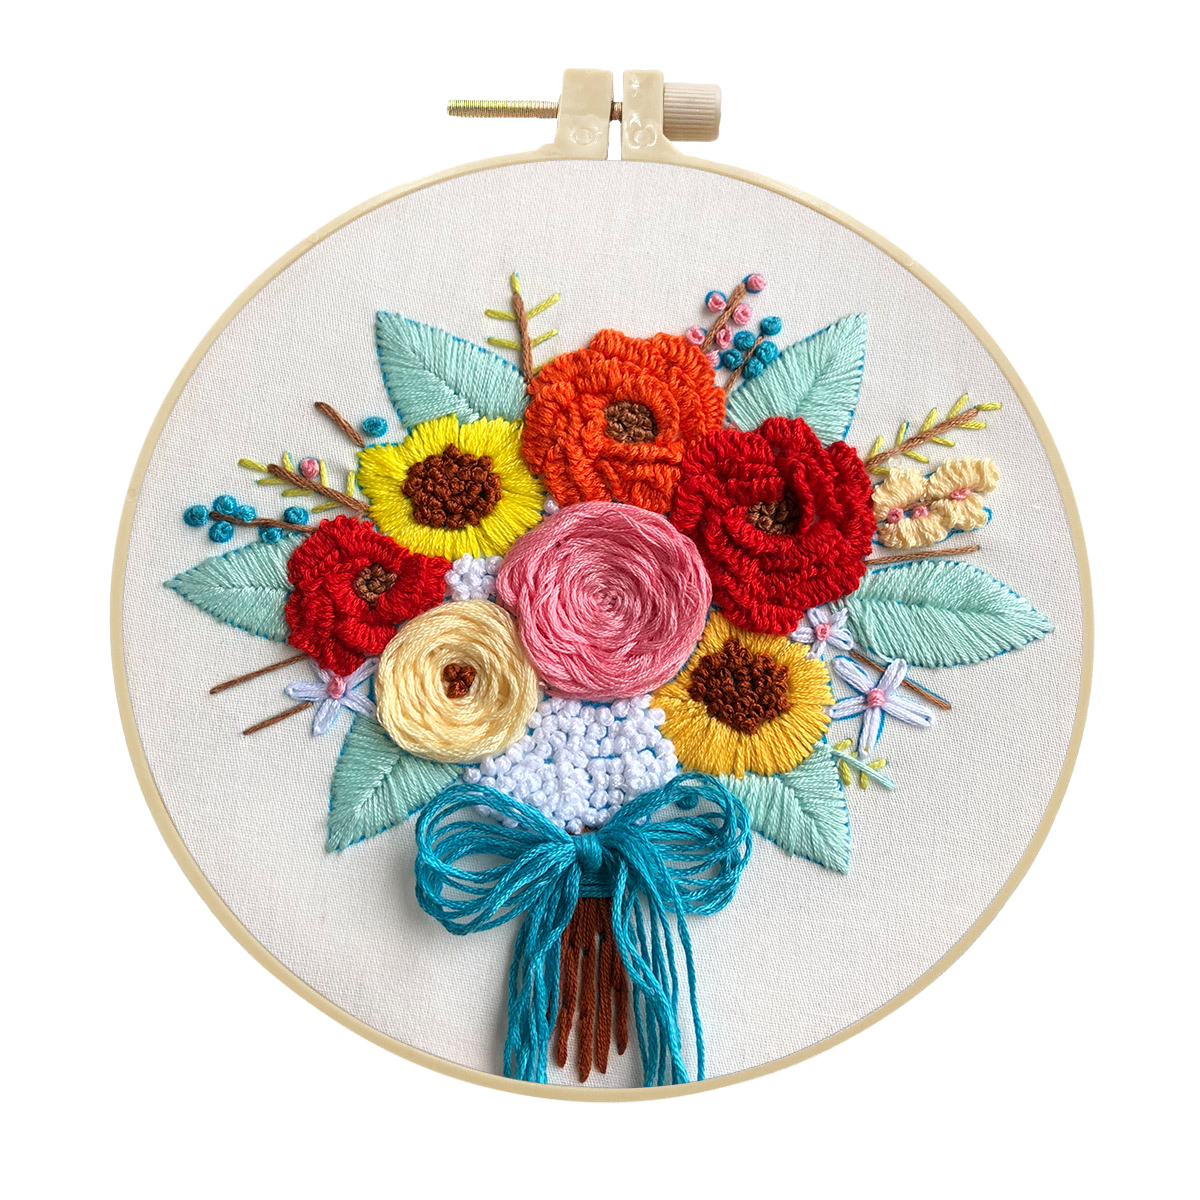 DIY Handmade Embroidery Kit Craft Cross Stitch Kits Beginner - Lovely Bouquet Pattern